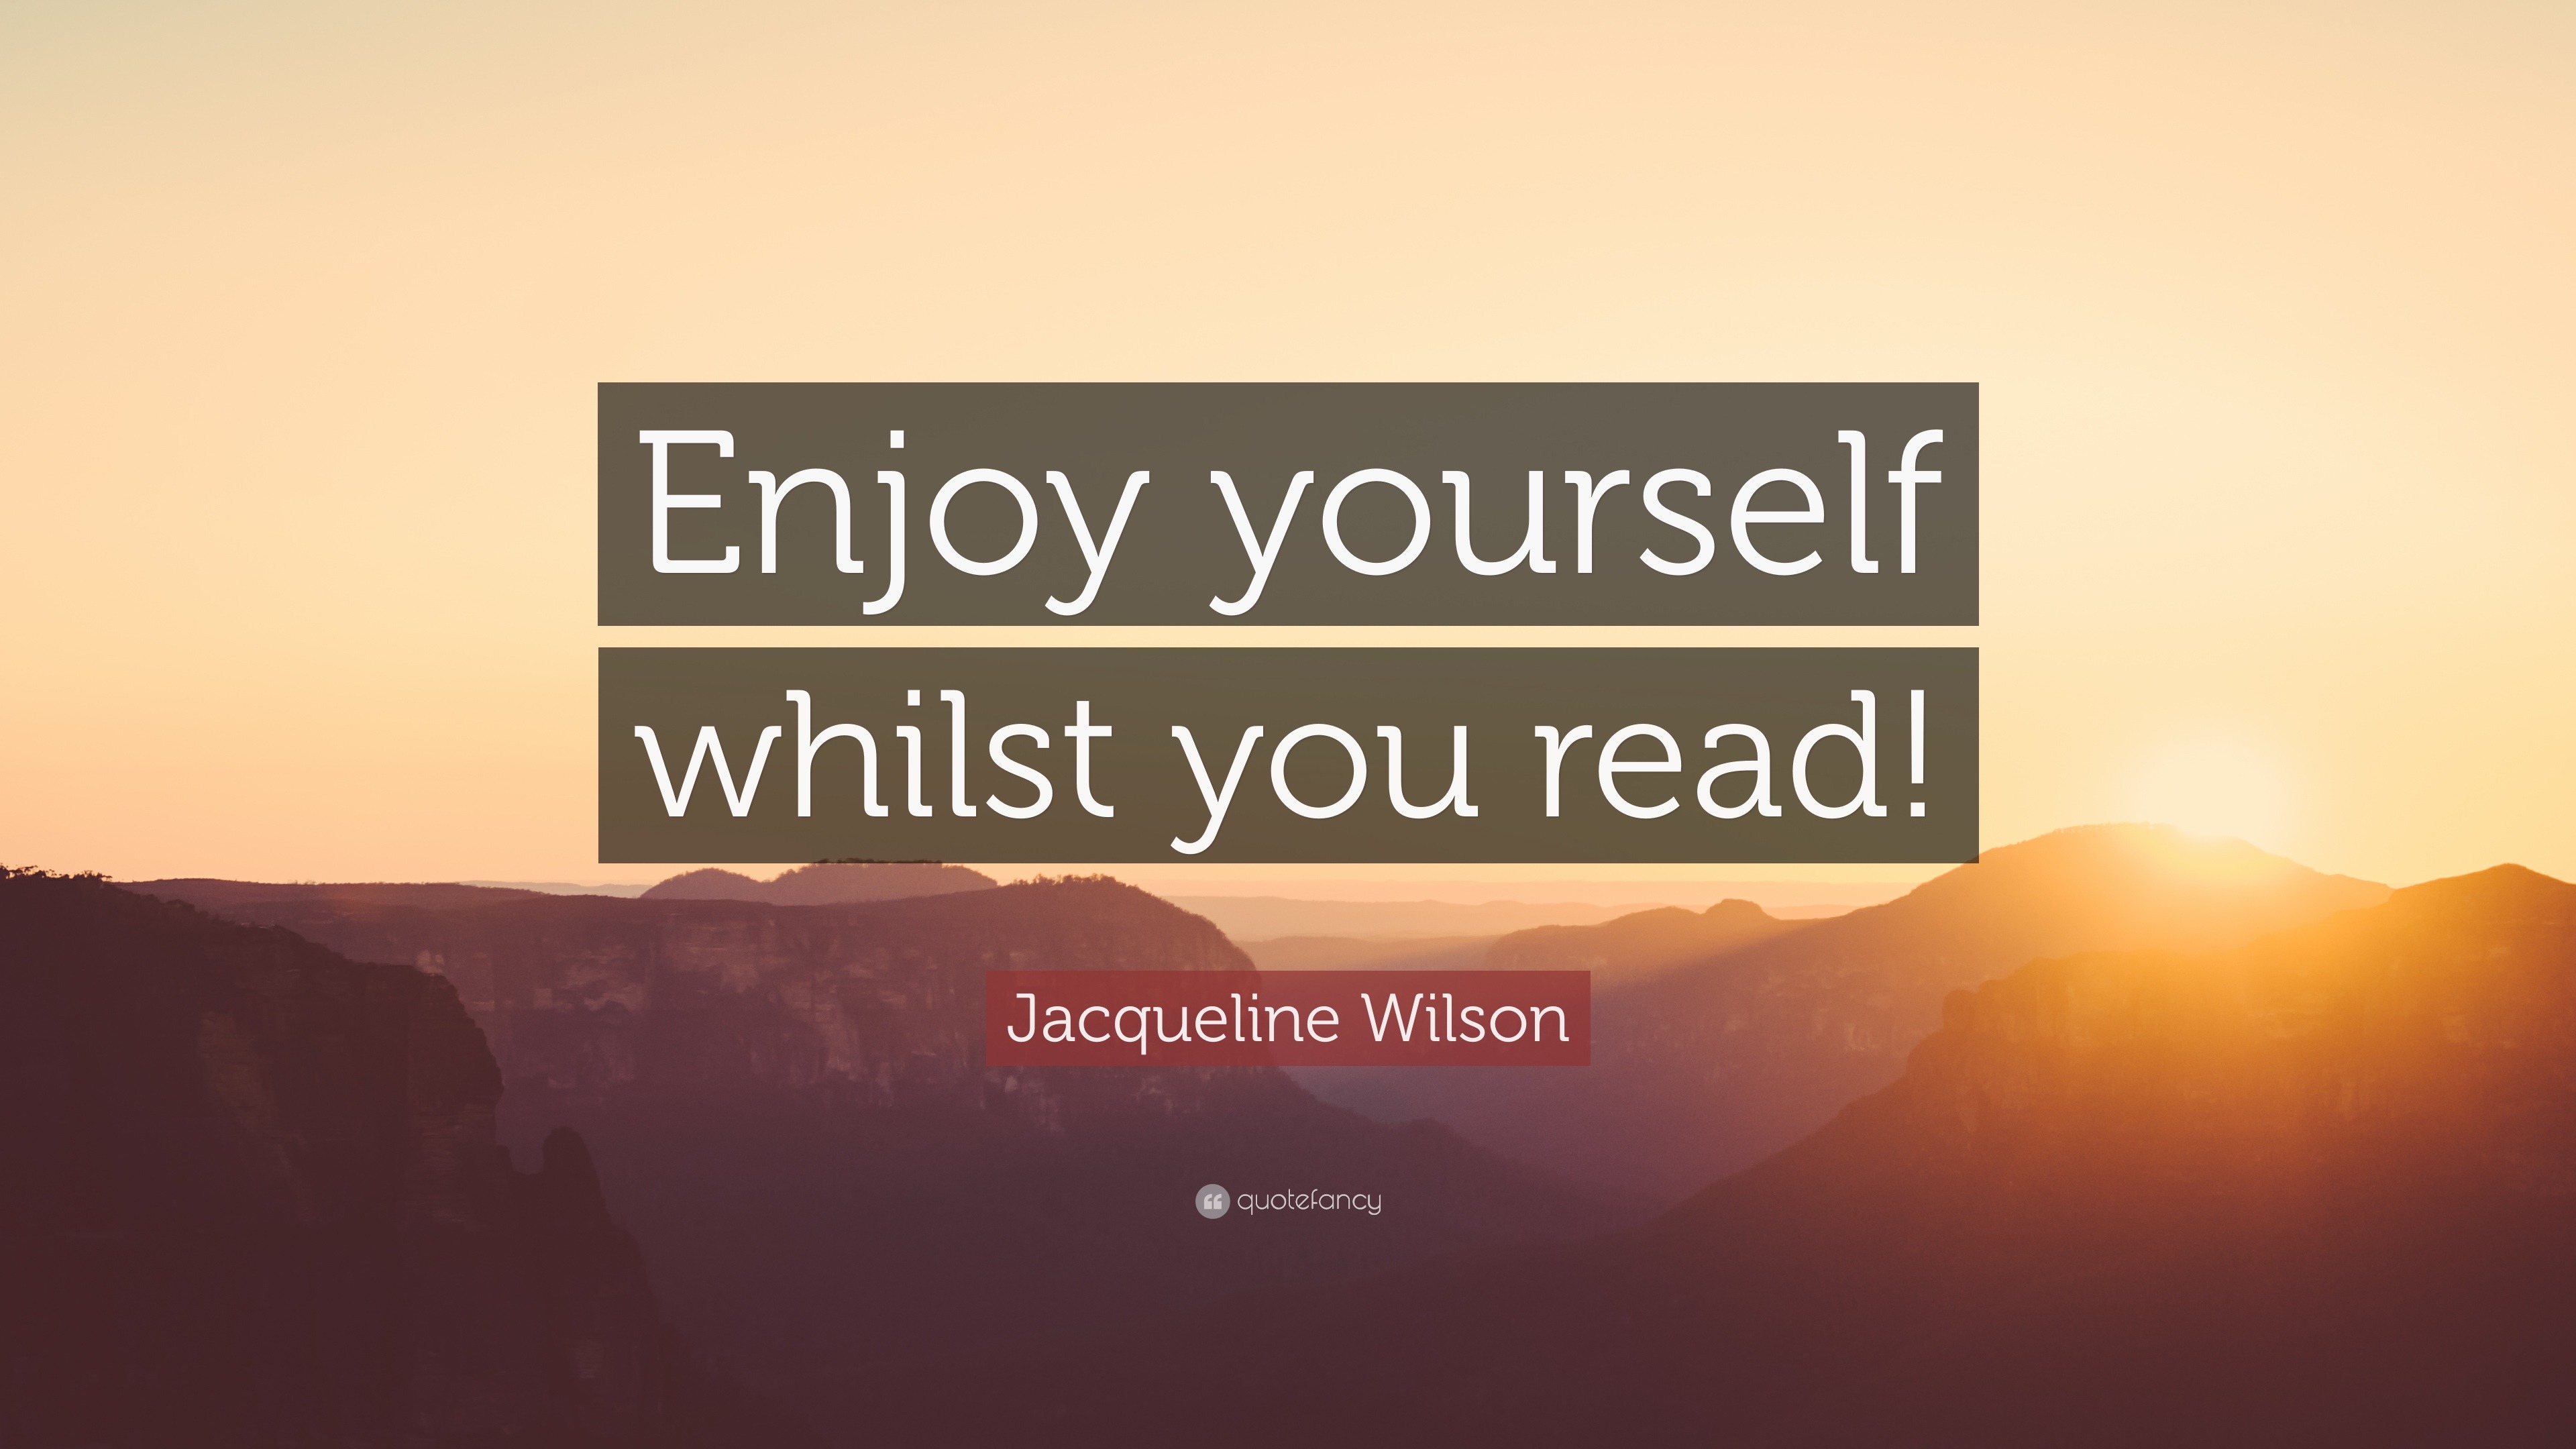 Jacqueline Wilson Quotes (8 wallpapers) - Quotefancy